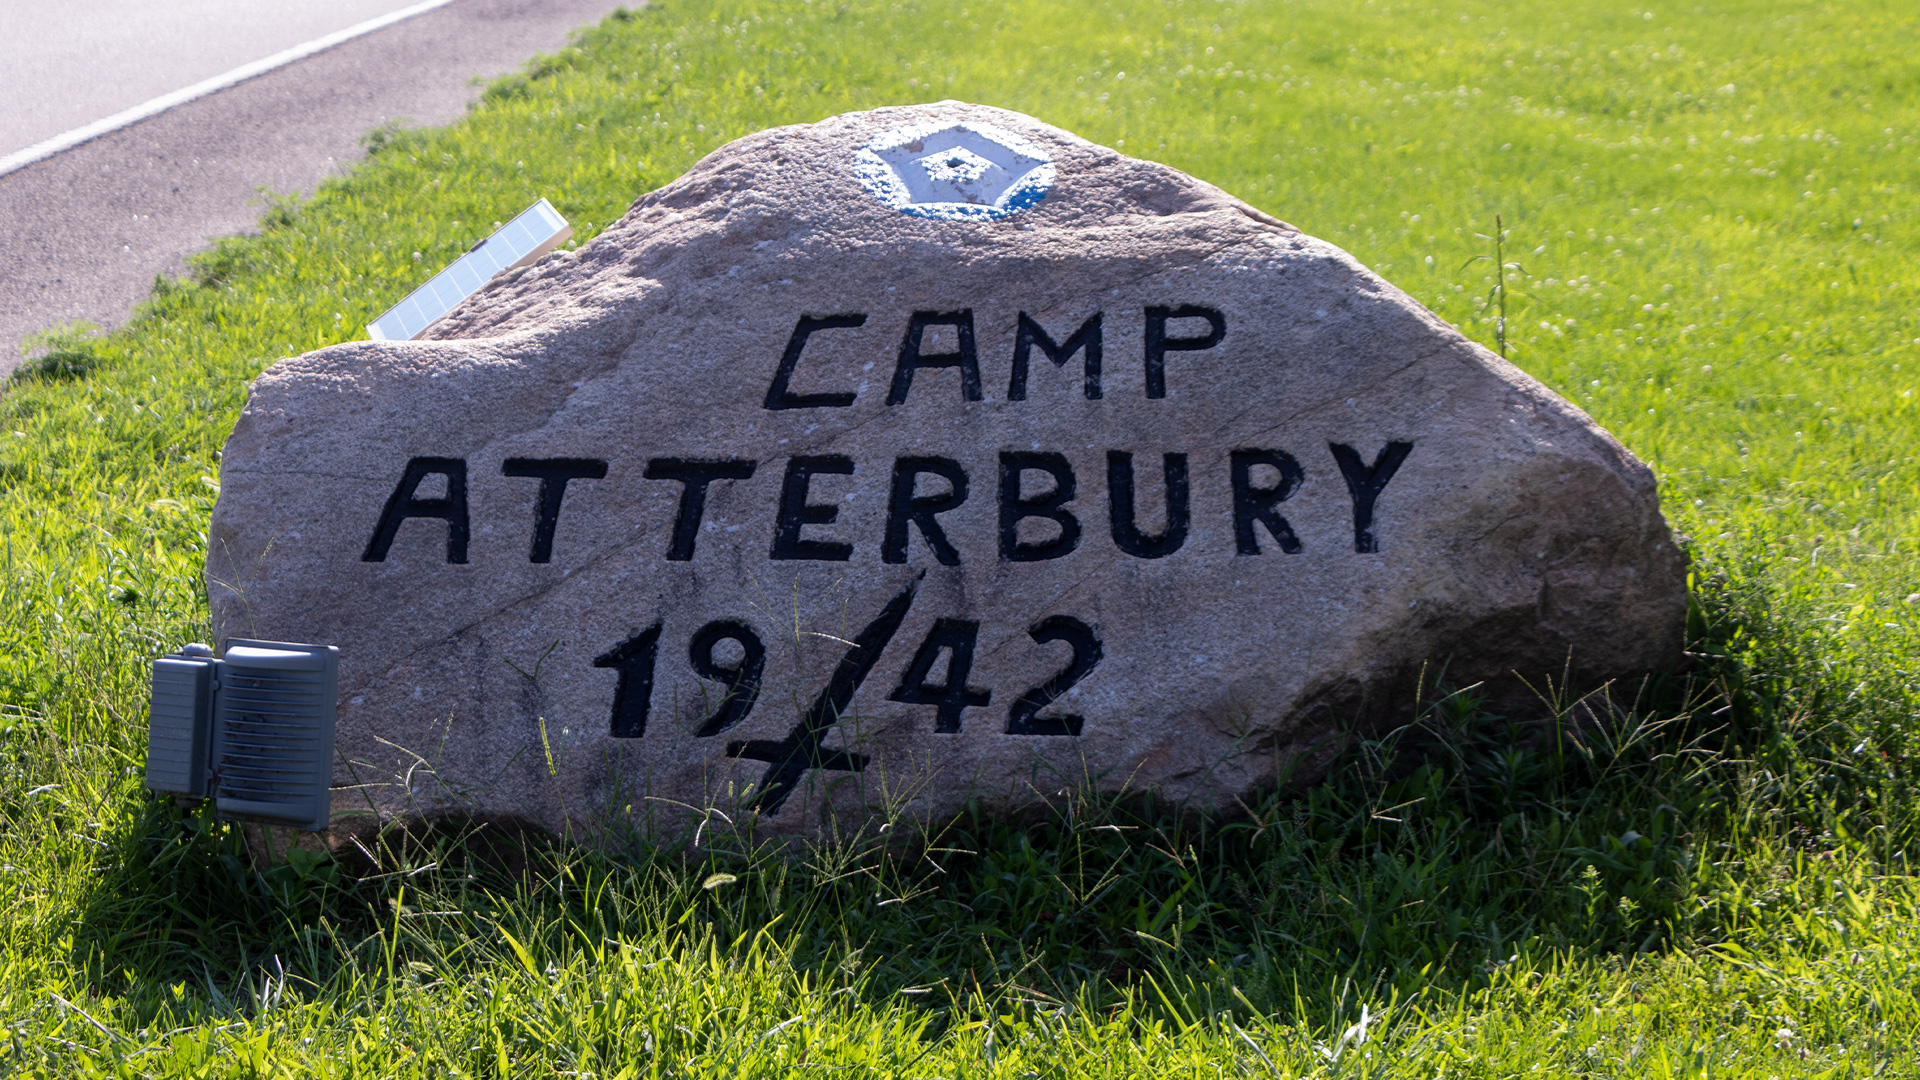 Camp Atterbury rock